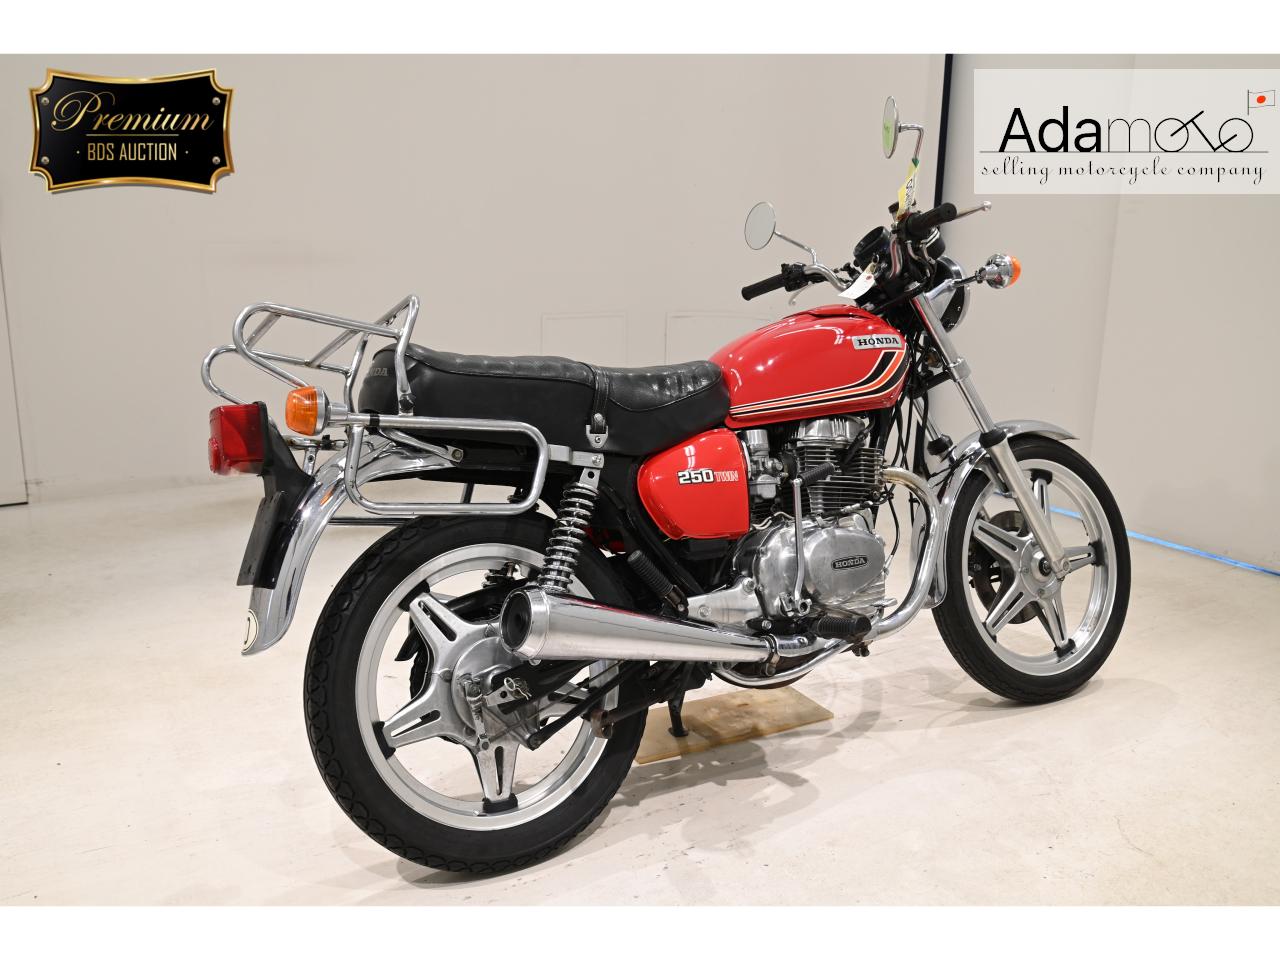 Honda CB250T - Adamoto - Motorcycles from Japan